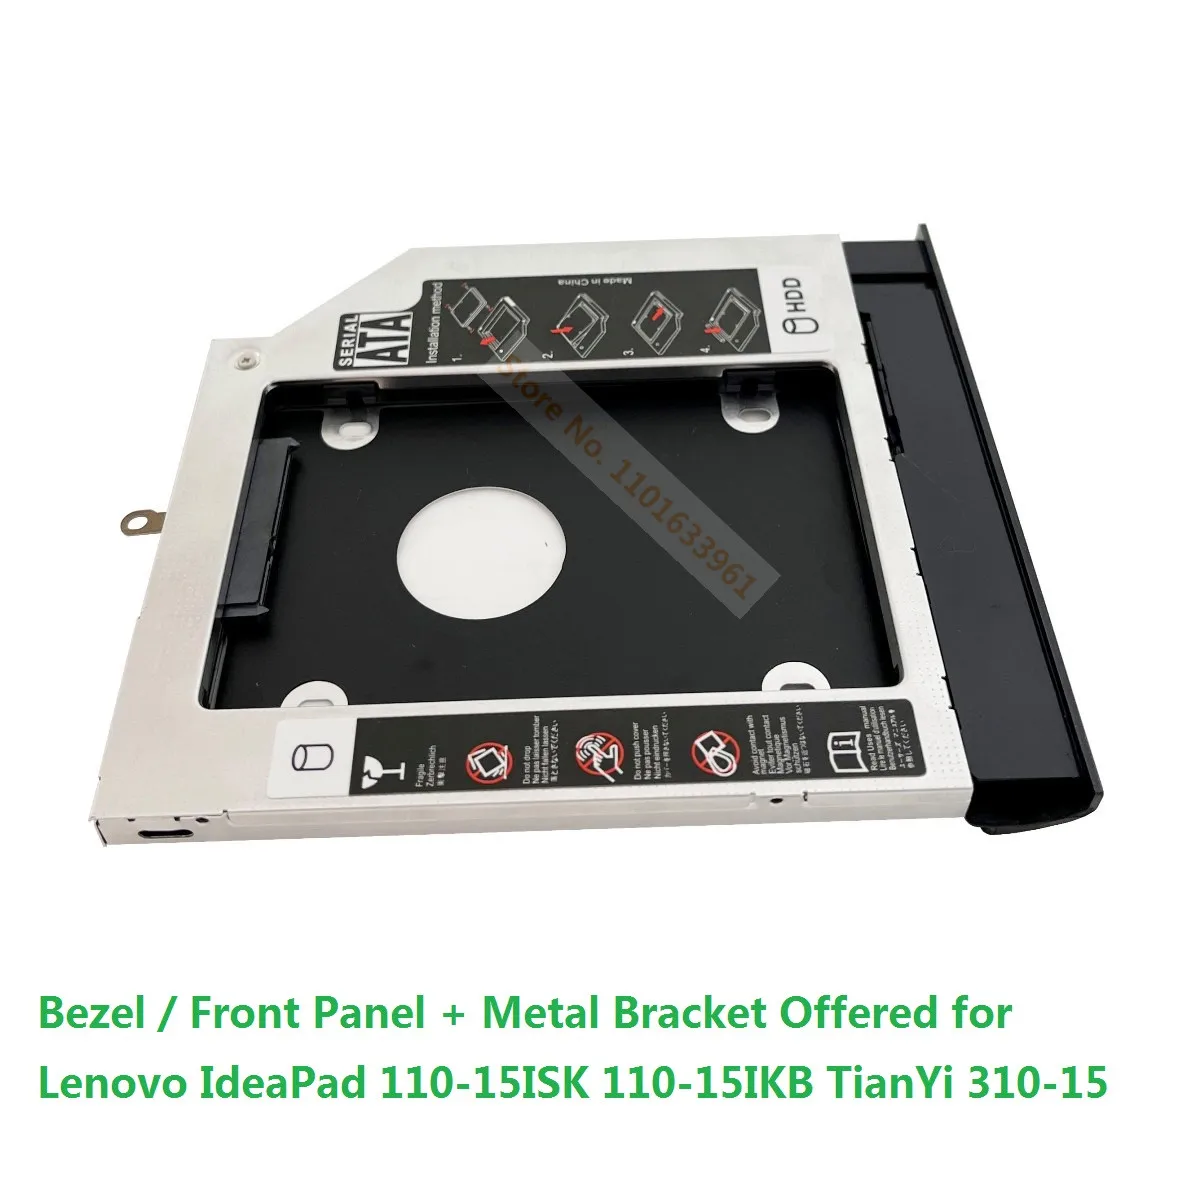 

Bezel Panel SATA 2nd Hard Drive HDD SSD Optical Bay Caddy Frame Bracket for Lenovo IdeaPad 110-15ISK 110-15IKB TianYi 310-15